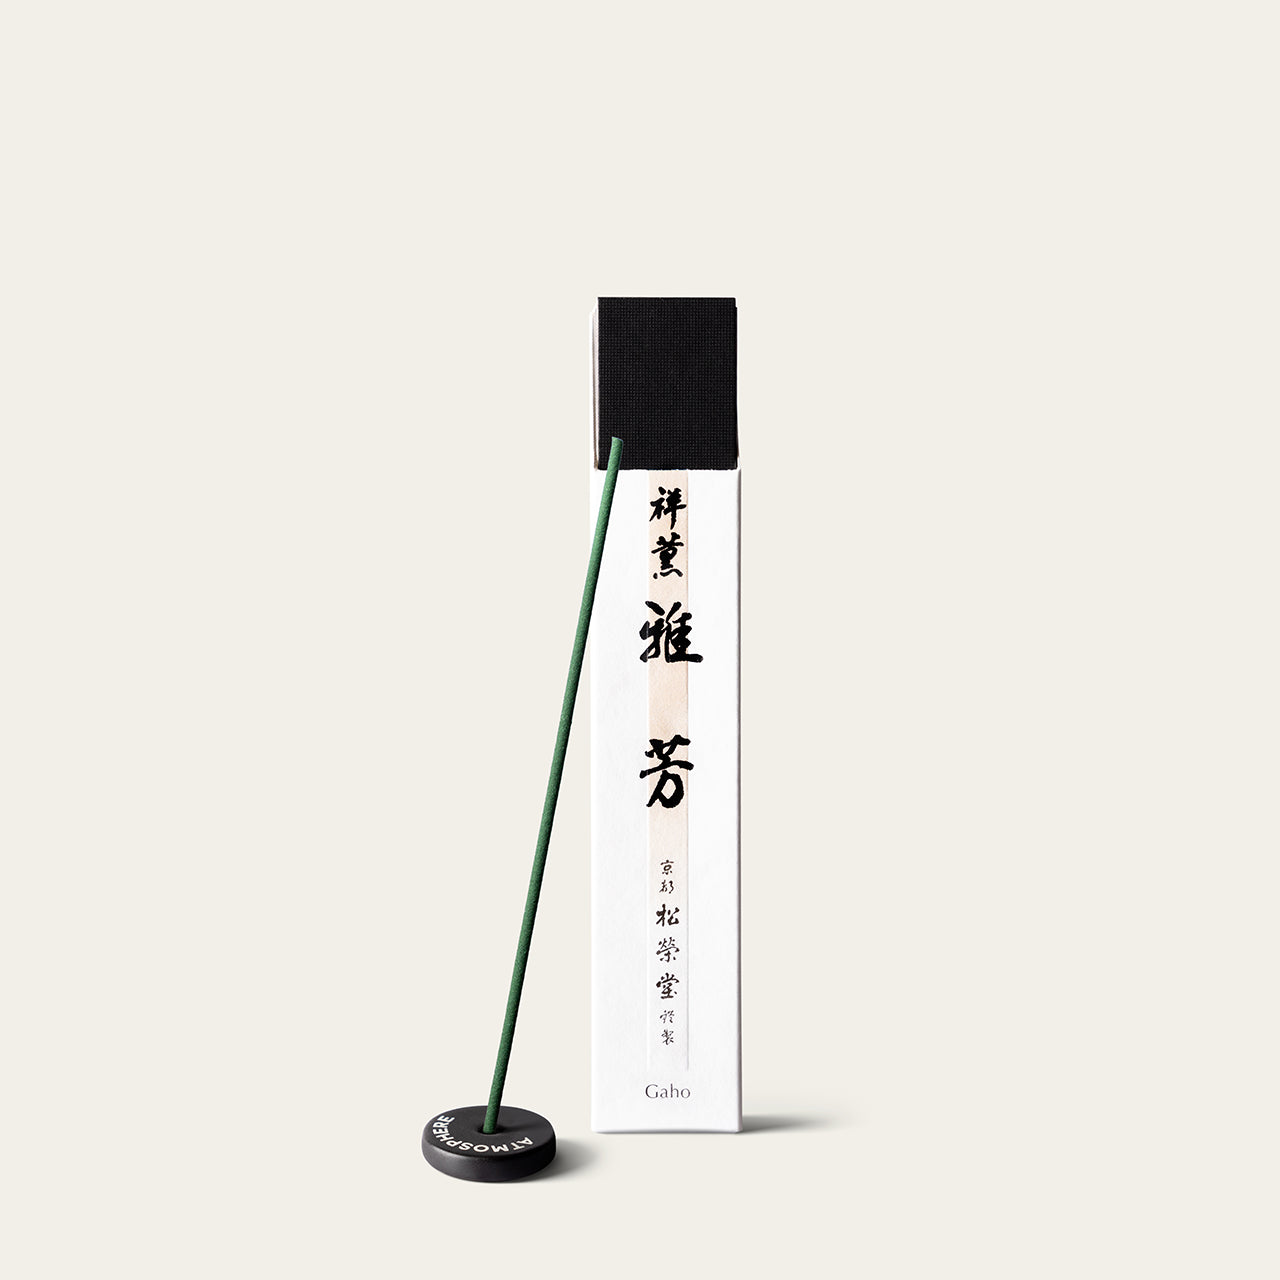 Shoyeido Premium Refinement Gaho Japanese incense sticks (15 sticks) with Atmosphere ceramic incense holder